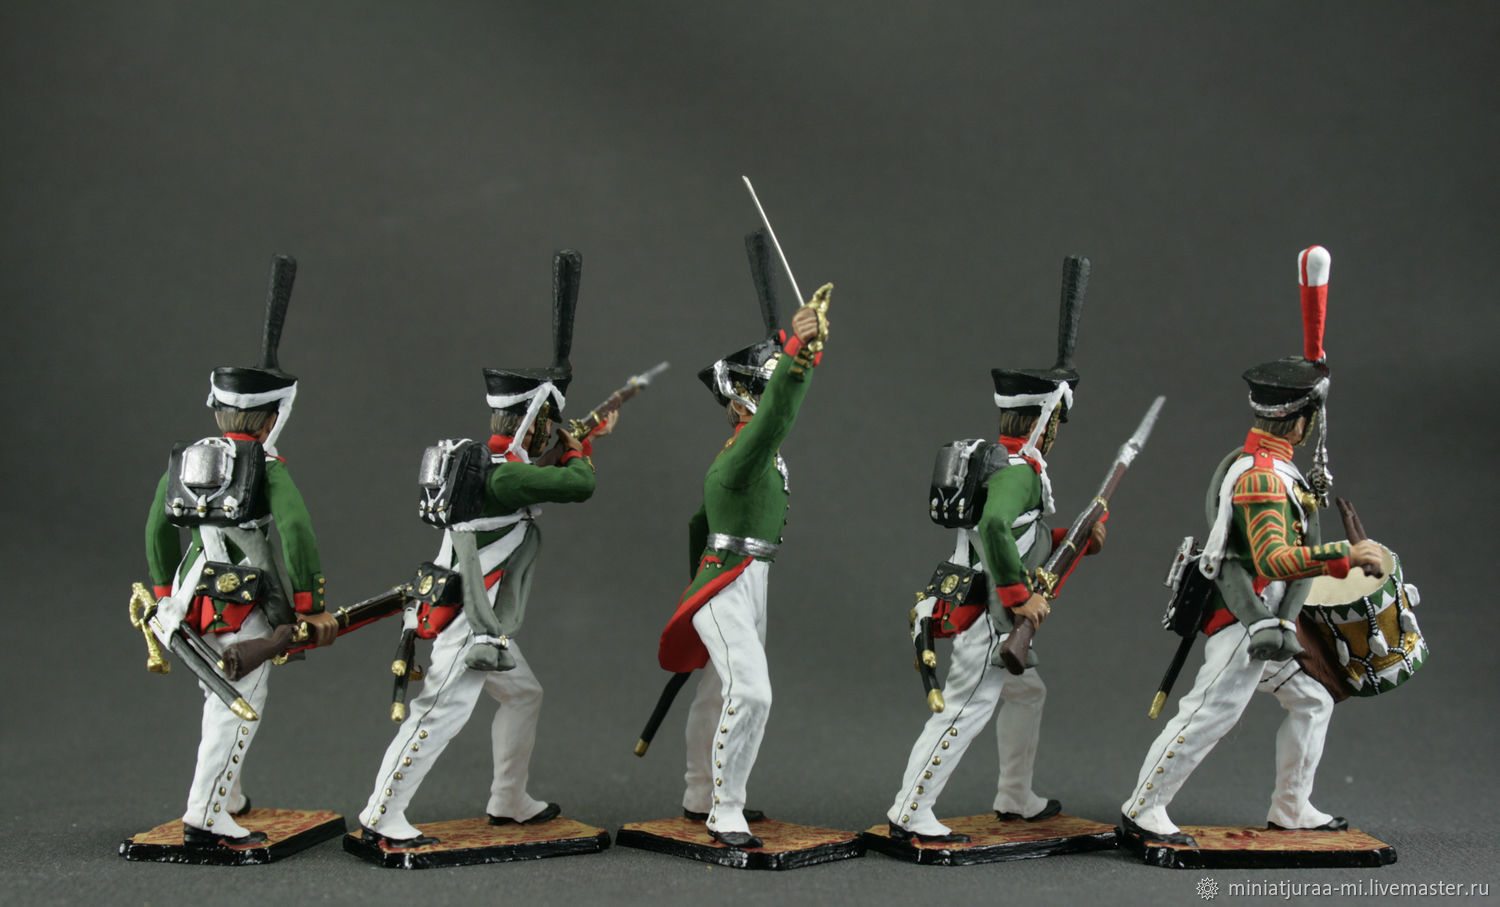 3 figures NAP#06 1:32 Napoleonic War 54 mm Tin Soldier Set AUSTRIA 